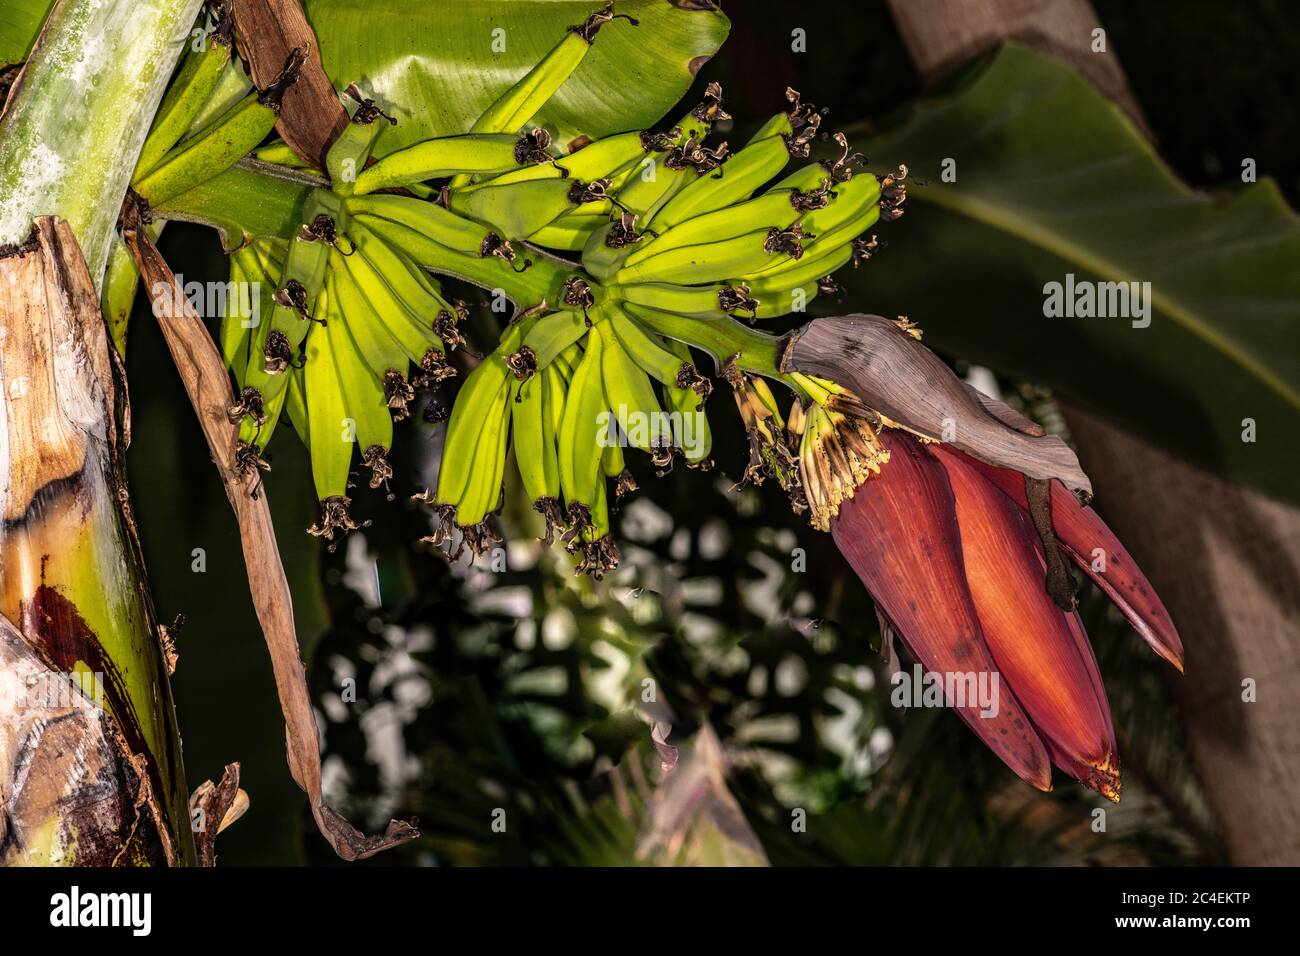 Banana (Musa acuminata 'Dwarf Cavendish') Stock Photo